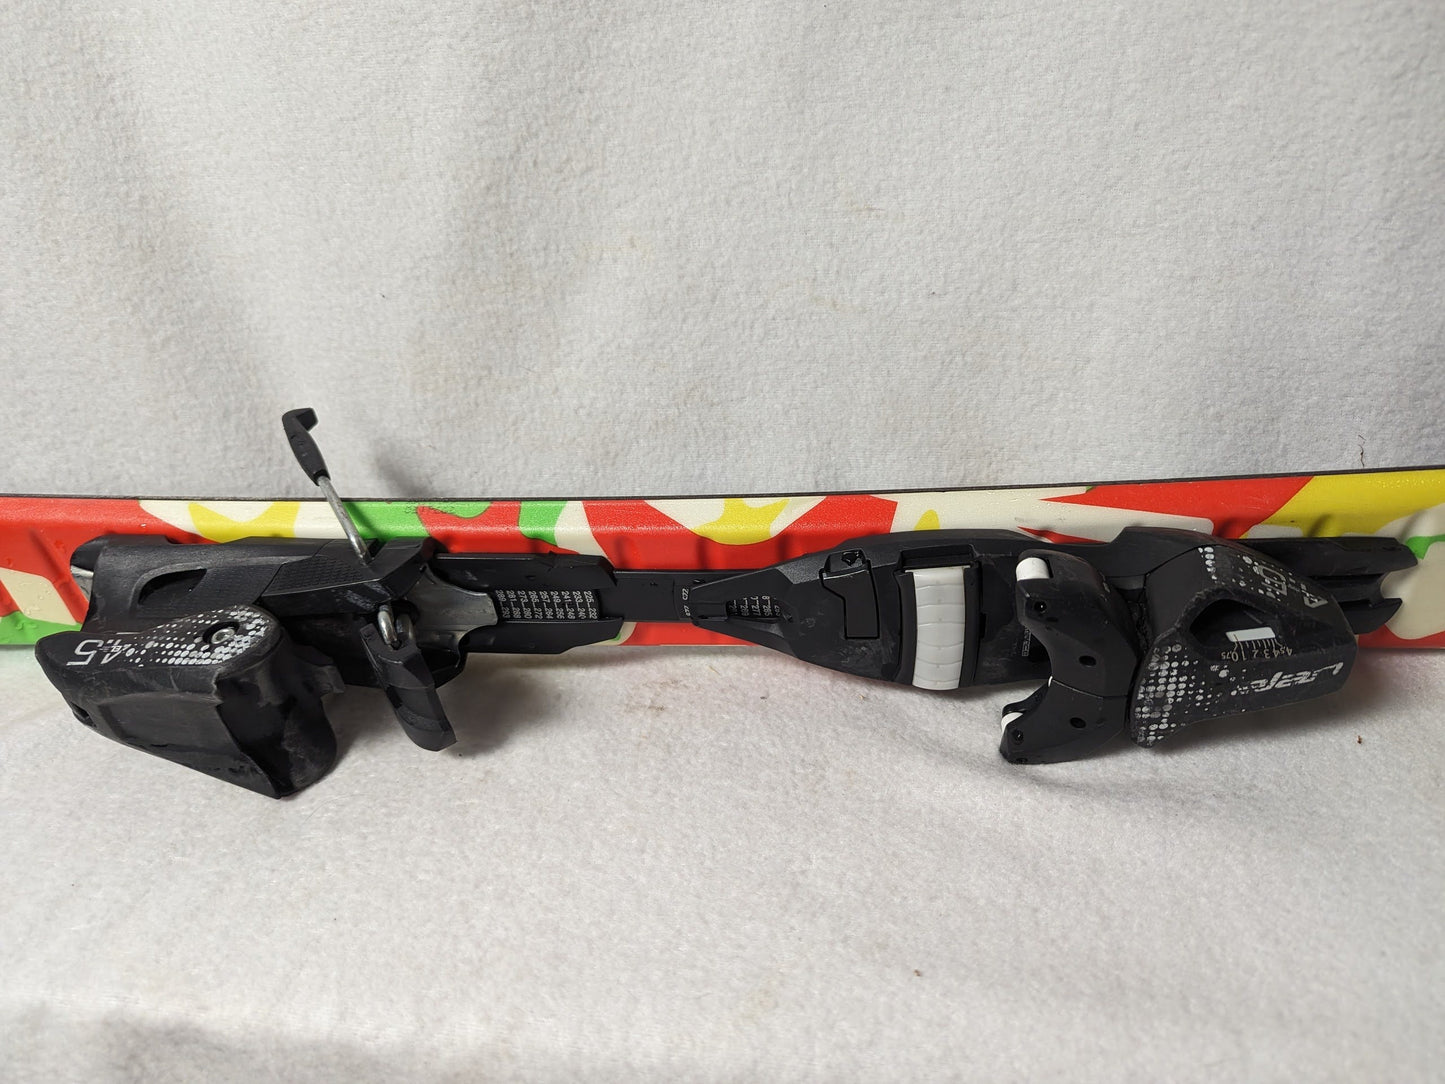 Elan Starr 110 Skis w/Elan Bindings Size 110 Cm Color White Condition Used